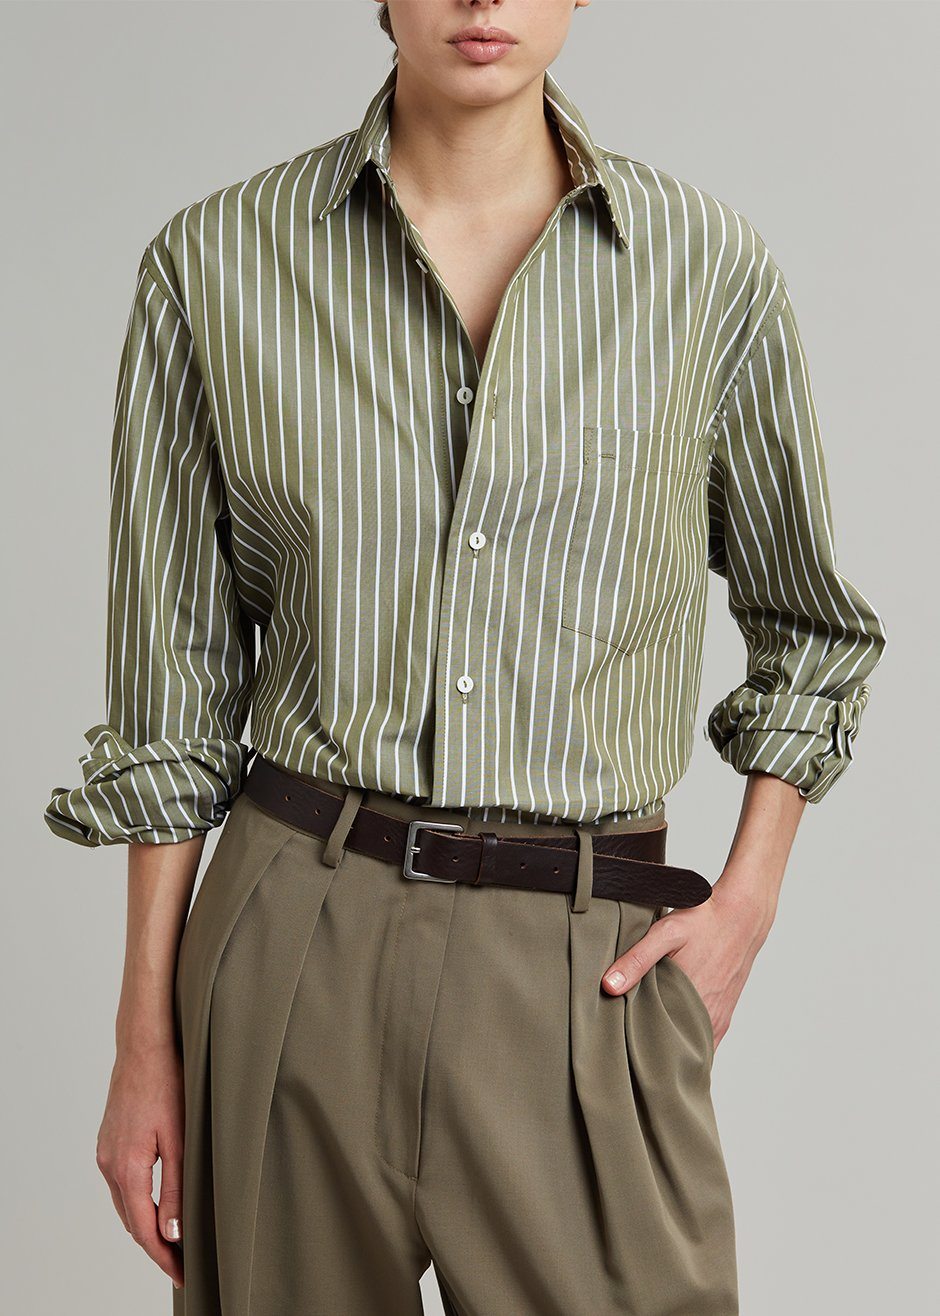 Matteau Classic Stripe Shirt - Olive - 2